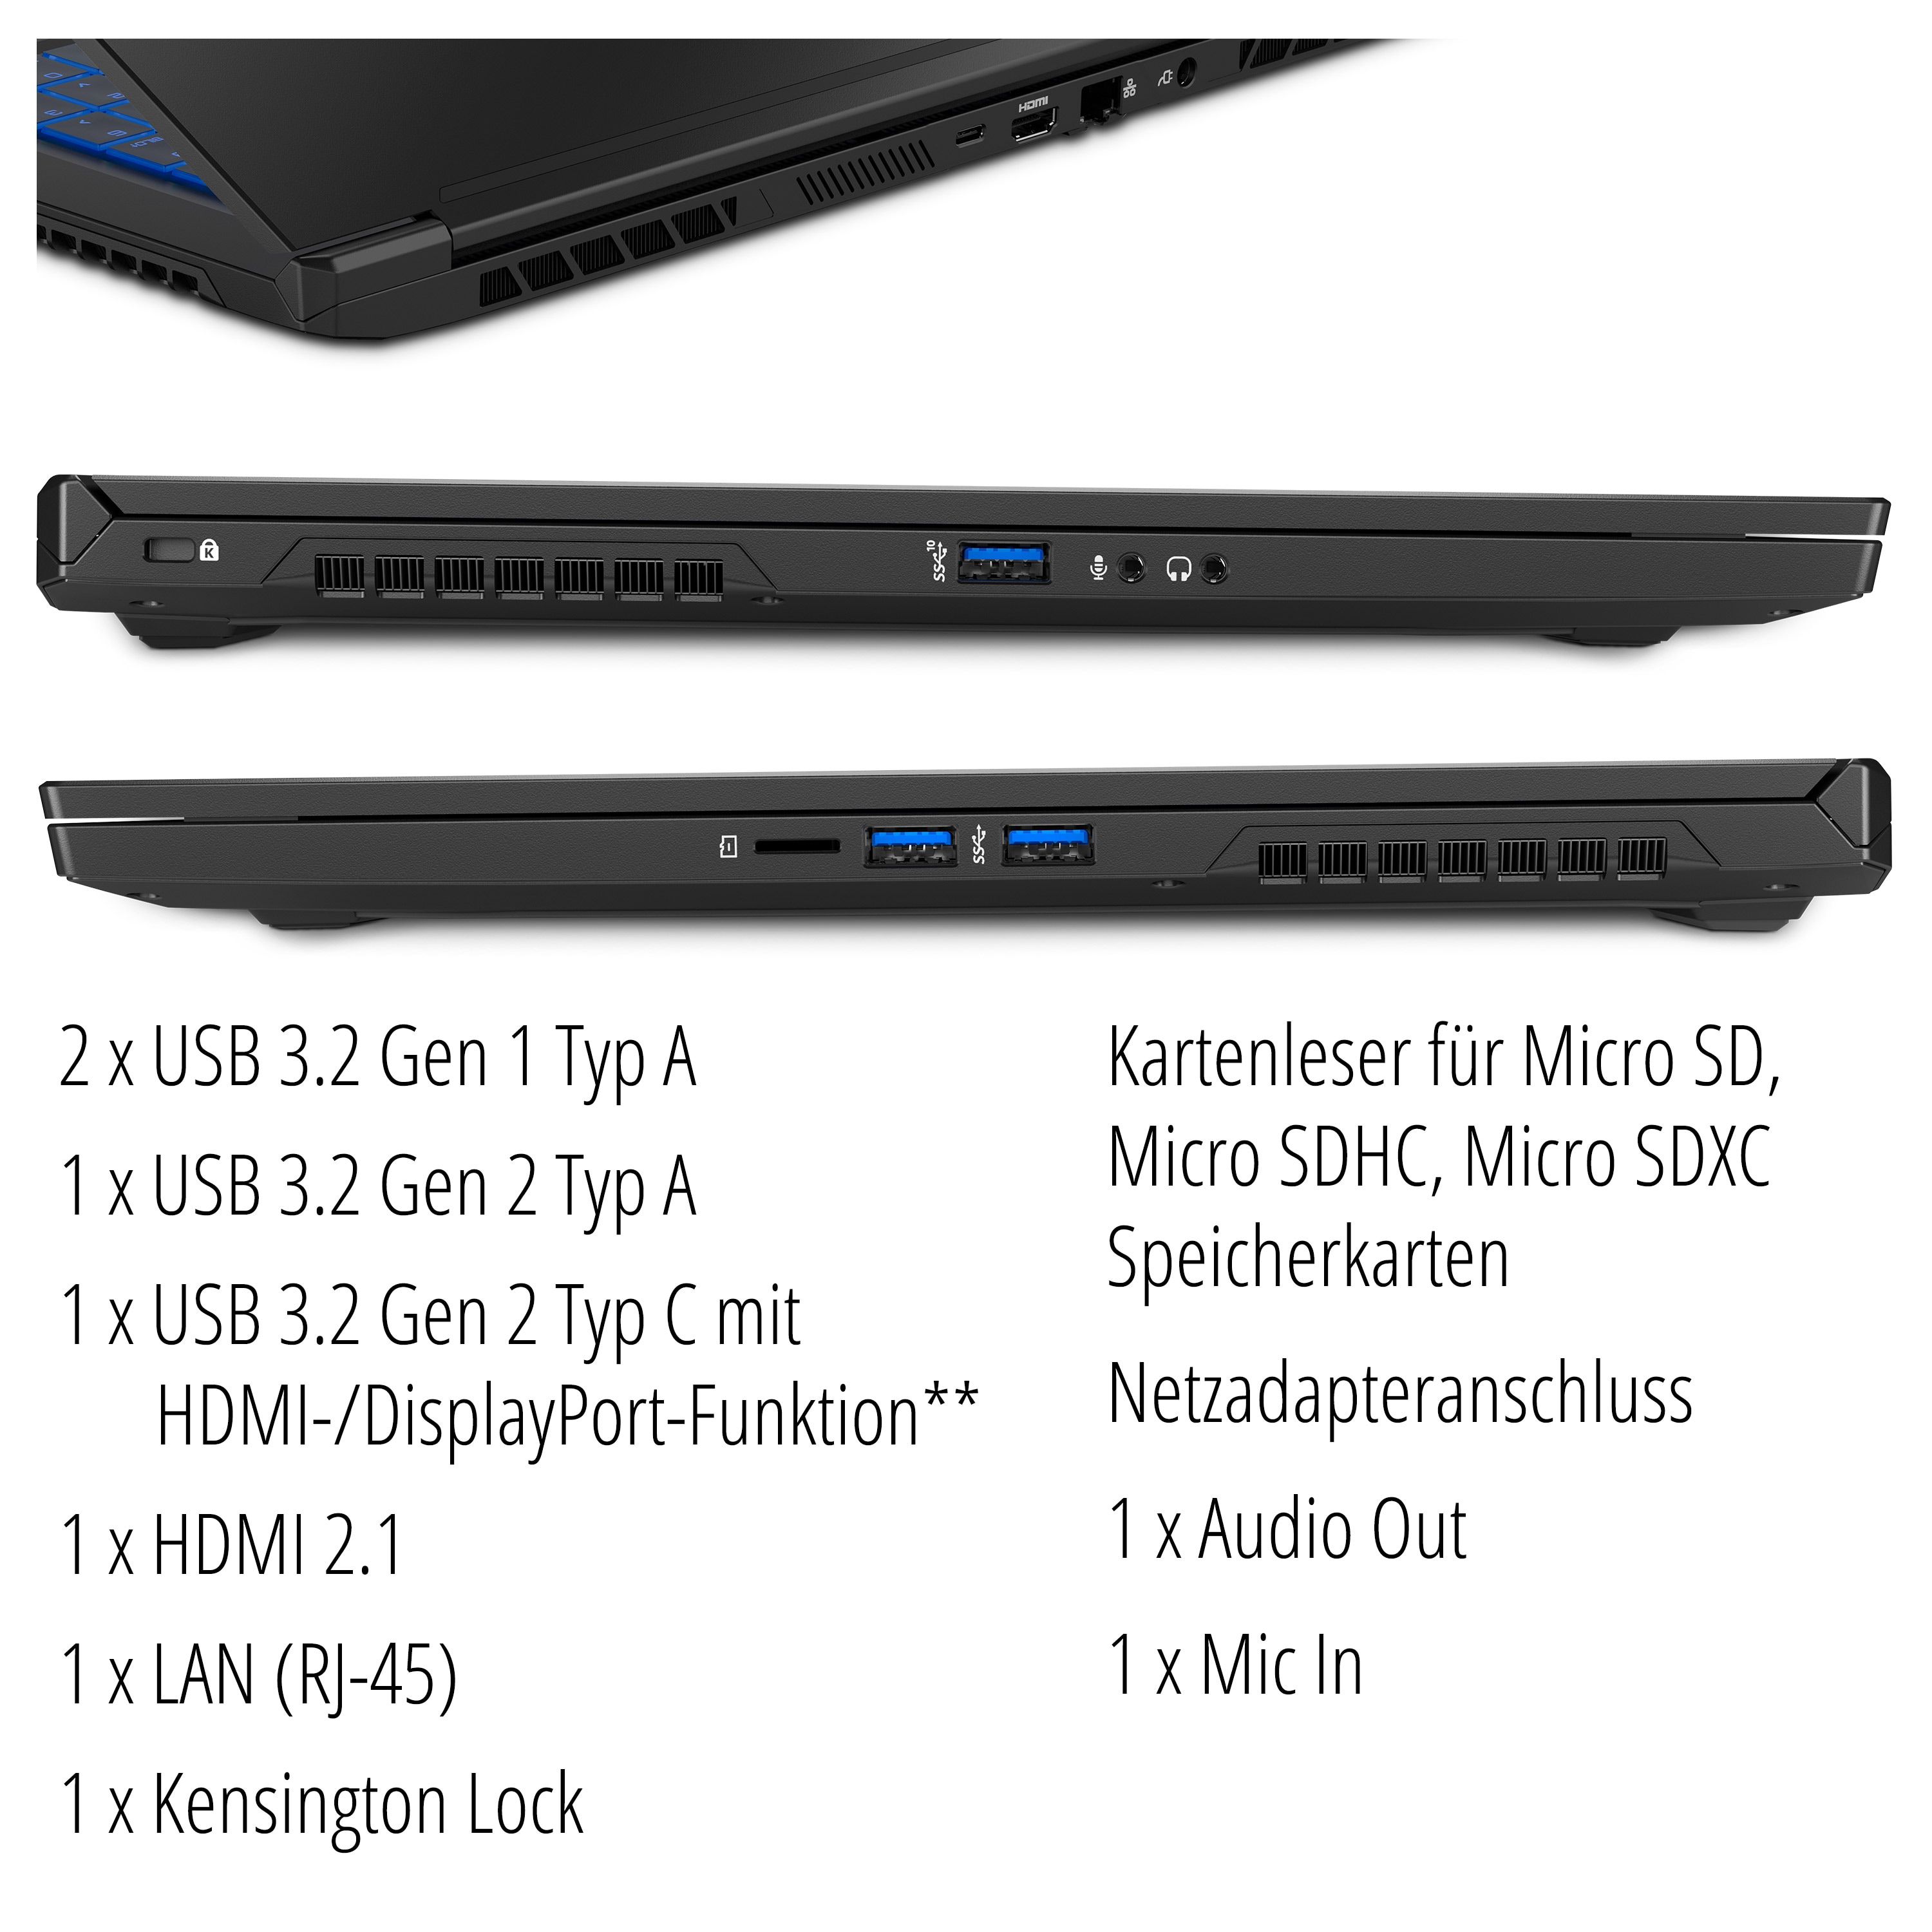 MEDION® ERAZER® Beast X25, AMD Ryzen™ 7 5800H, Windows 10 Home, 43,9 cm (17,3") FHD Display mit 240 Hz, NVIDIA® GeForce RTX™ 3070, 1 TB PCIe SSD, 16 GB RAM, High-End Gaming Notebook